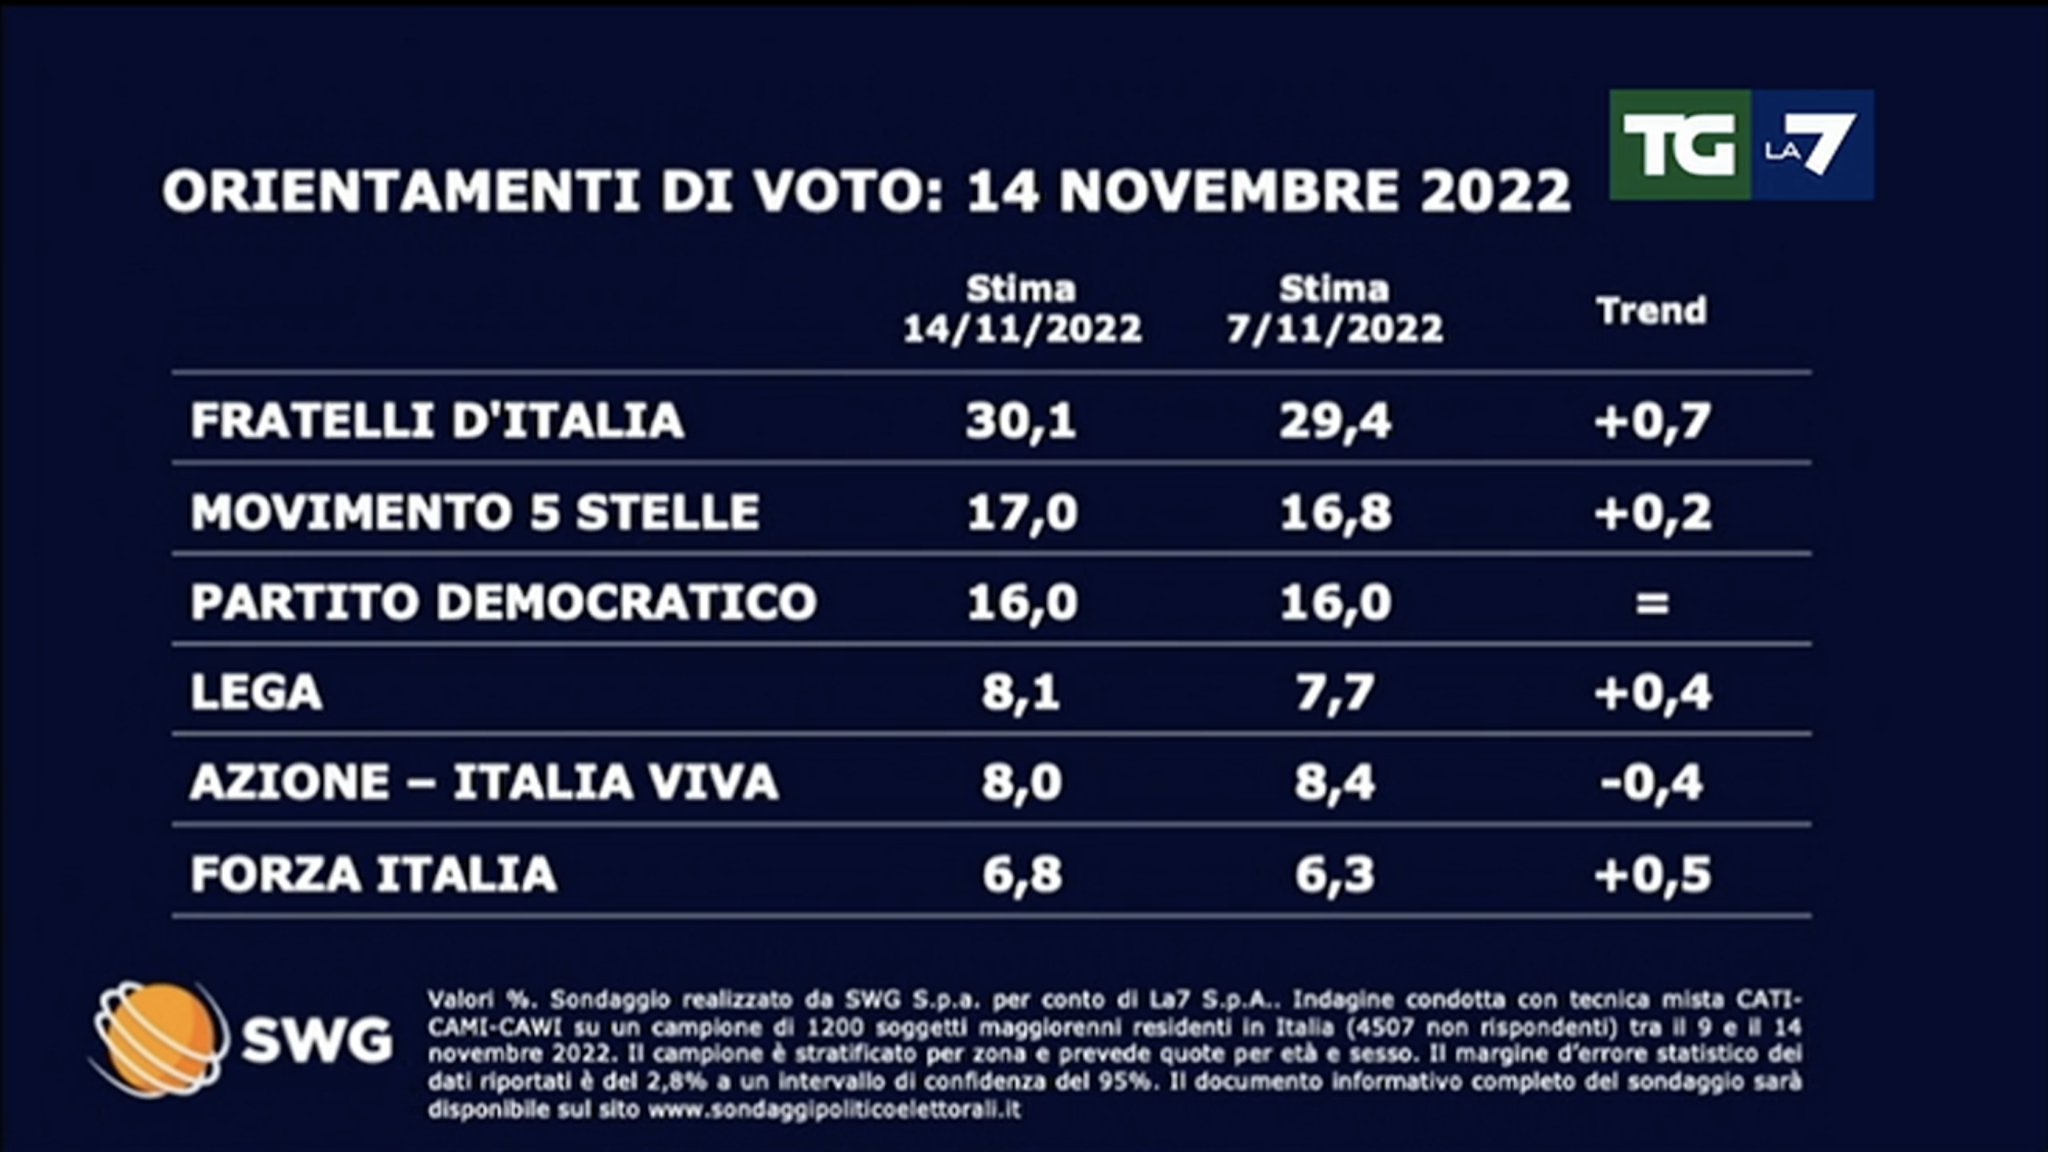 Fratelli d'italia sopra il 30% nei sondaggi